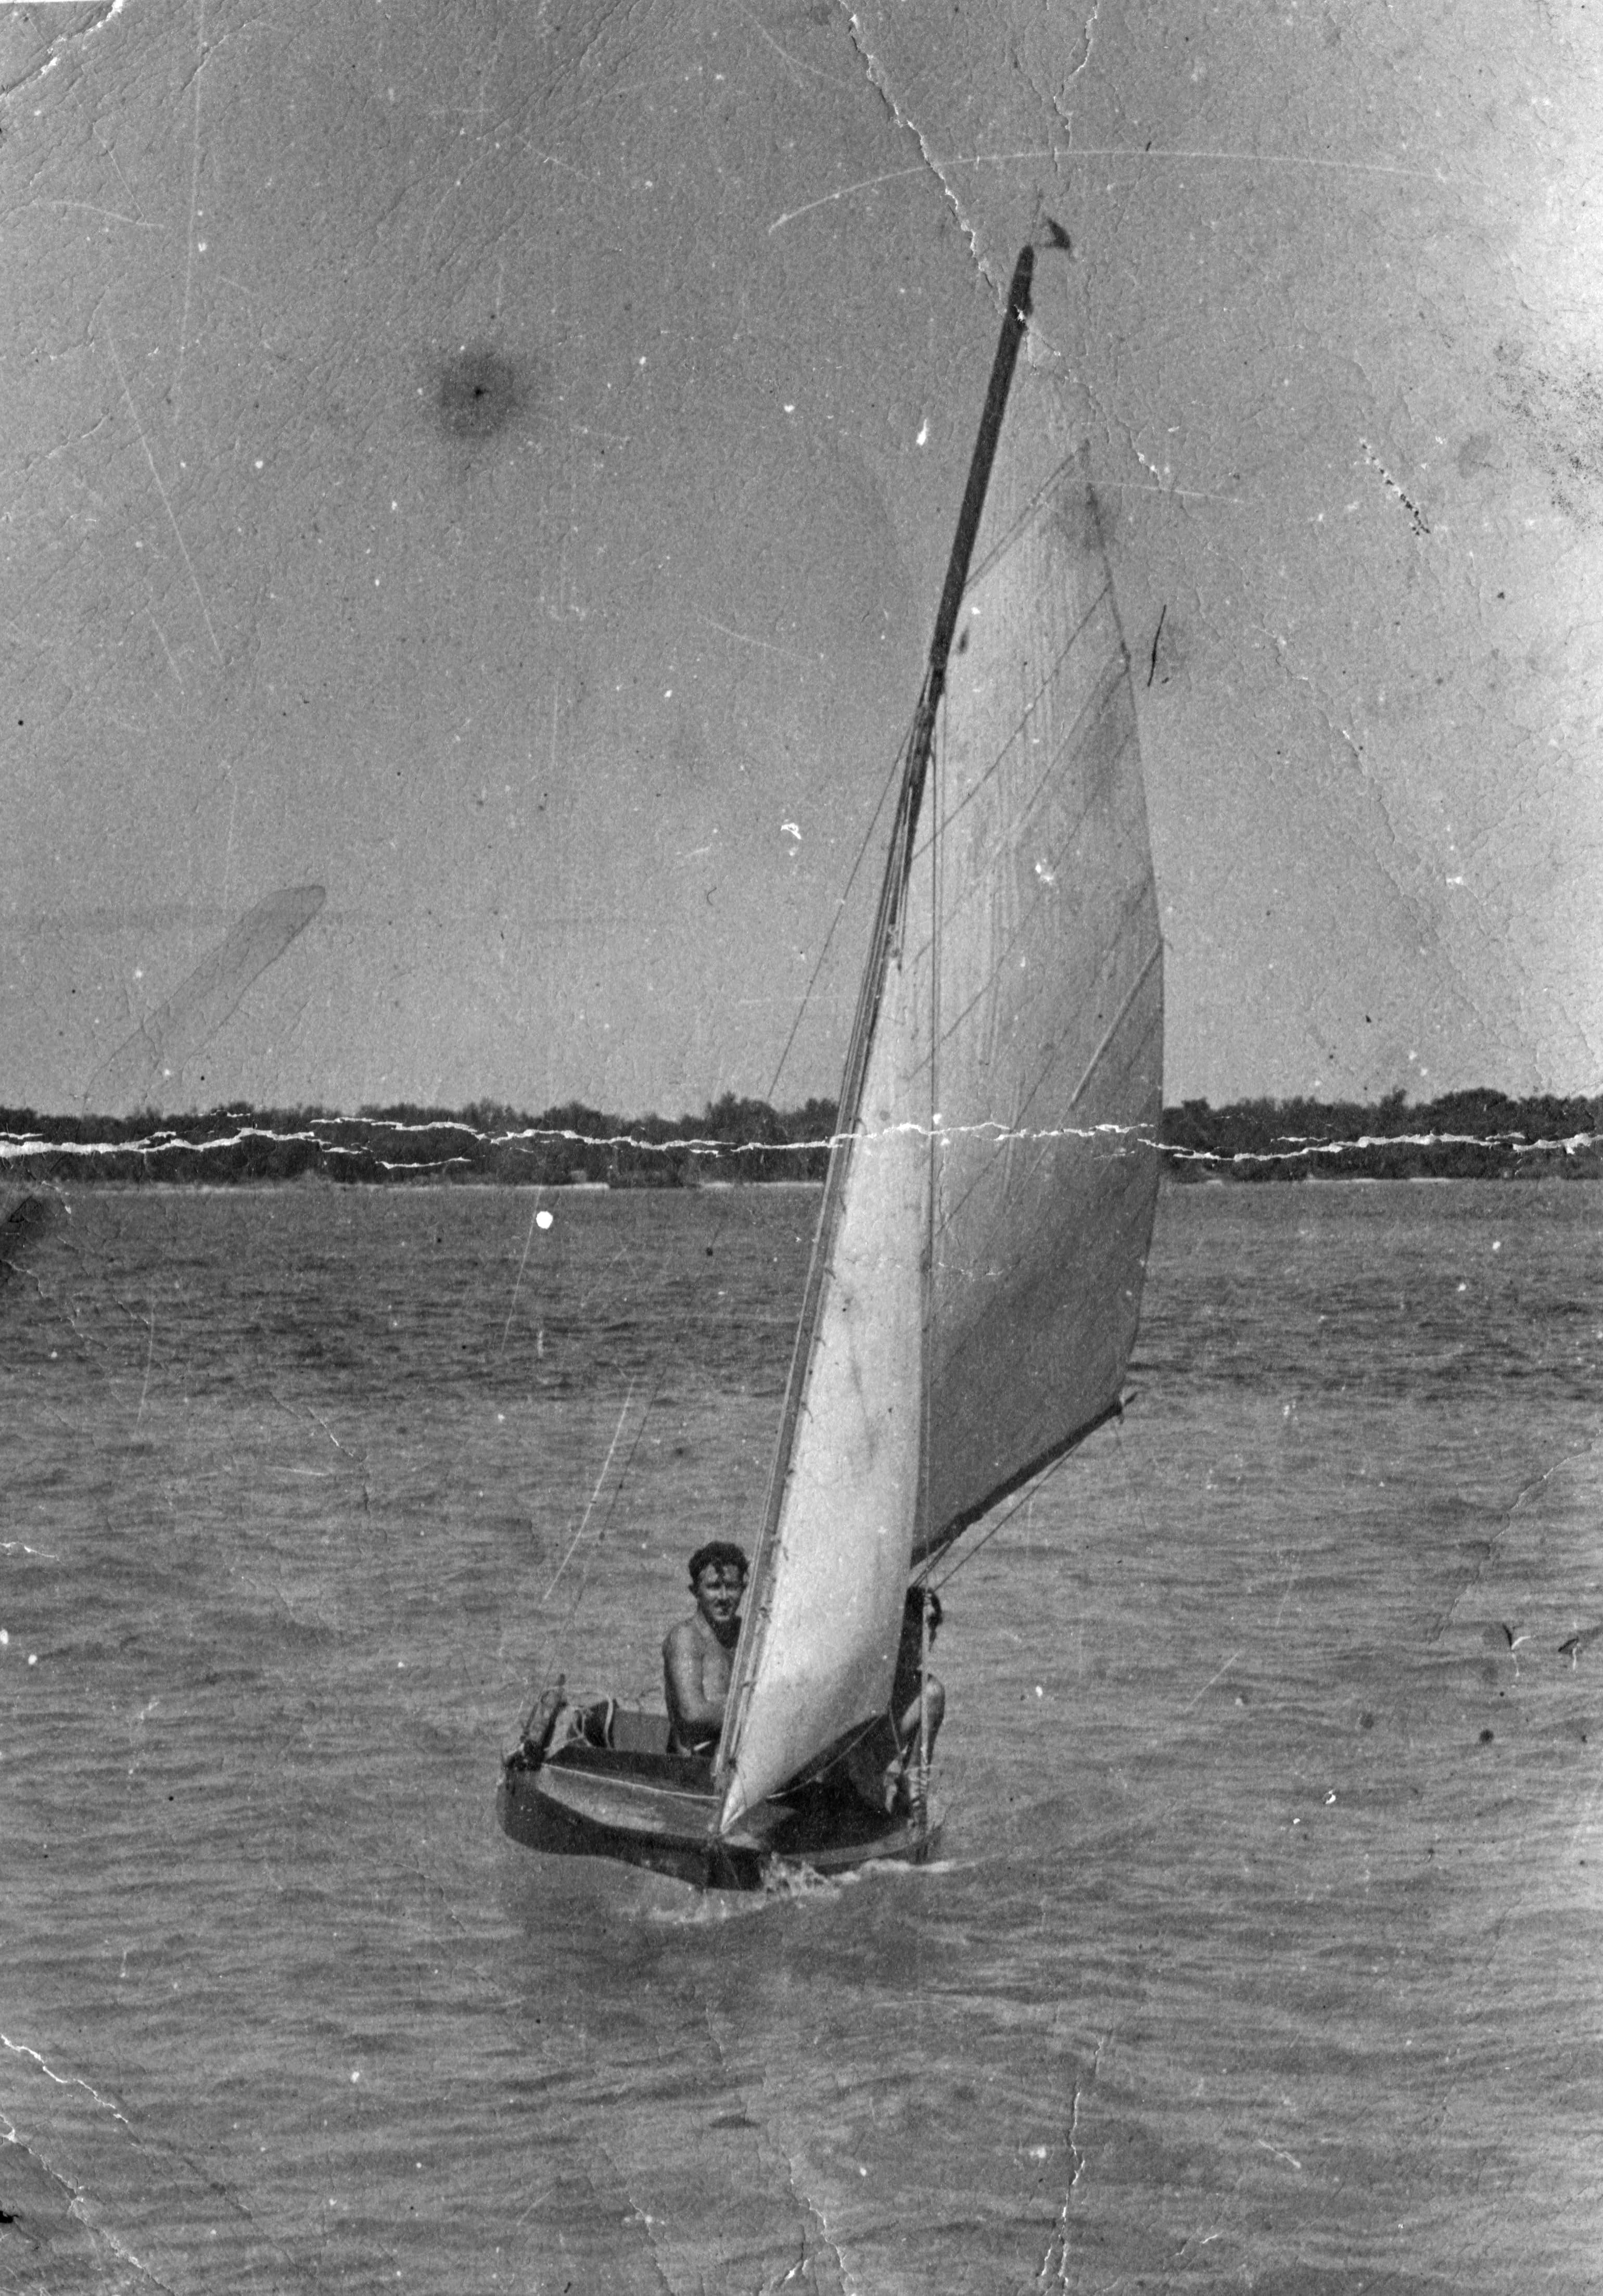 Robert-sailing-his-boat